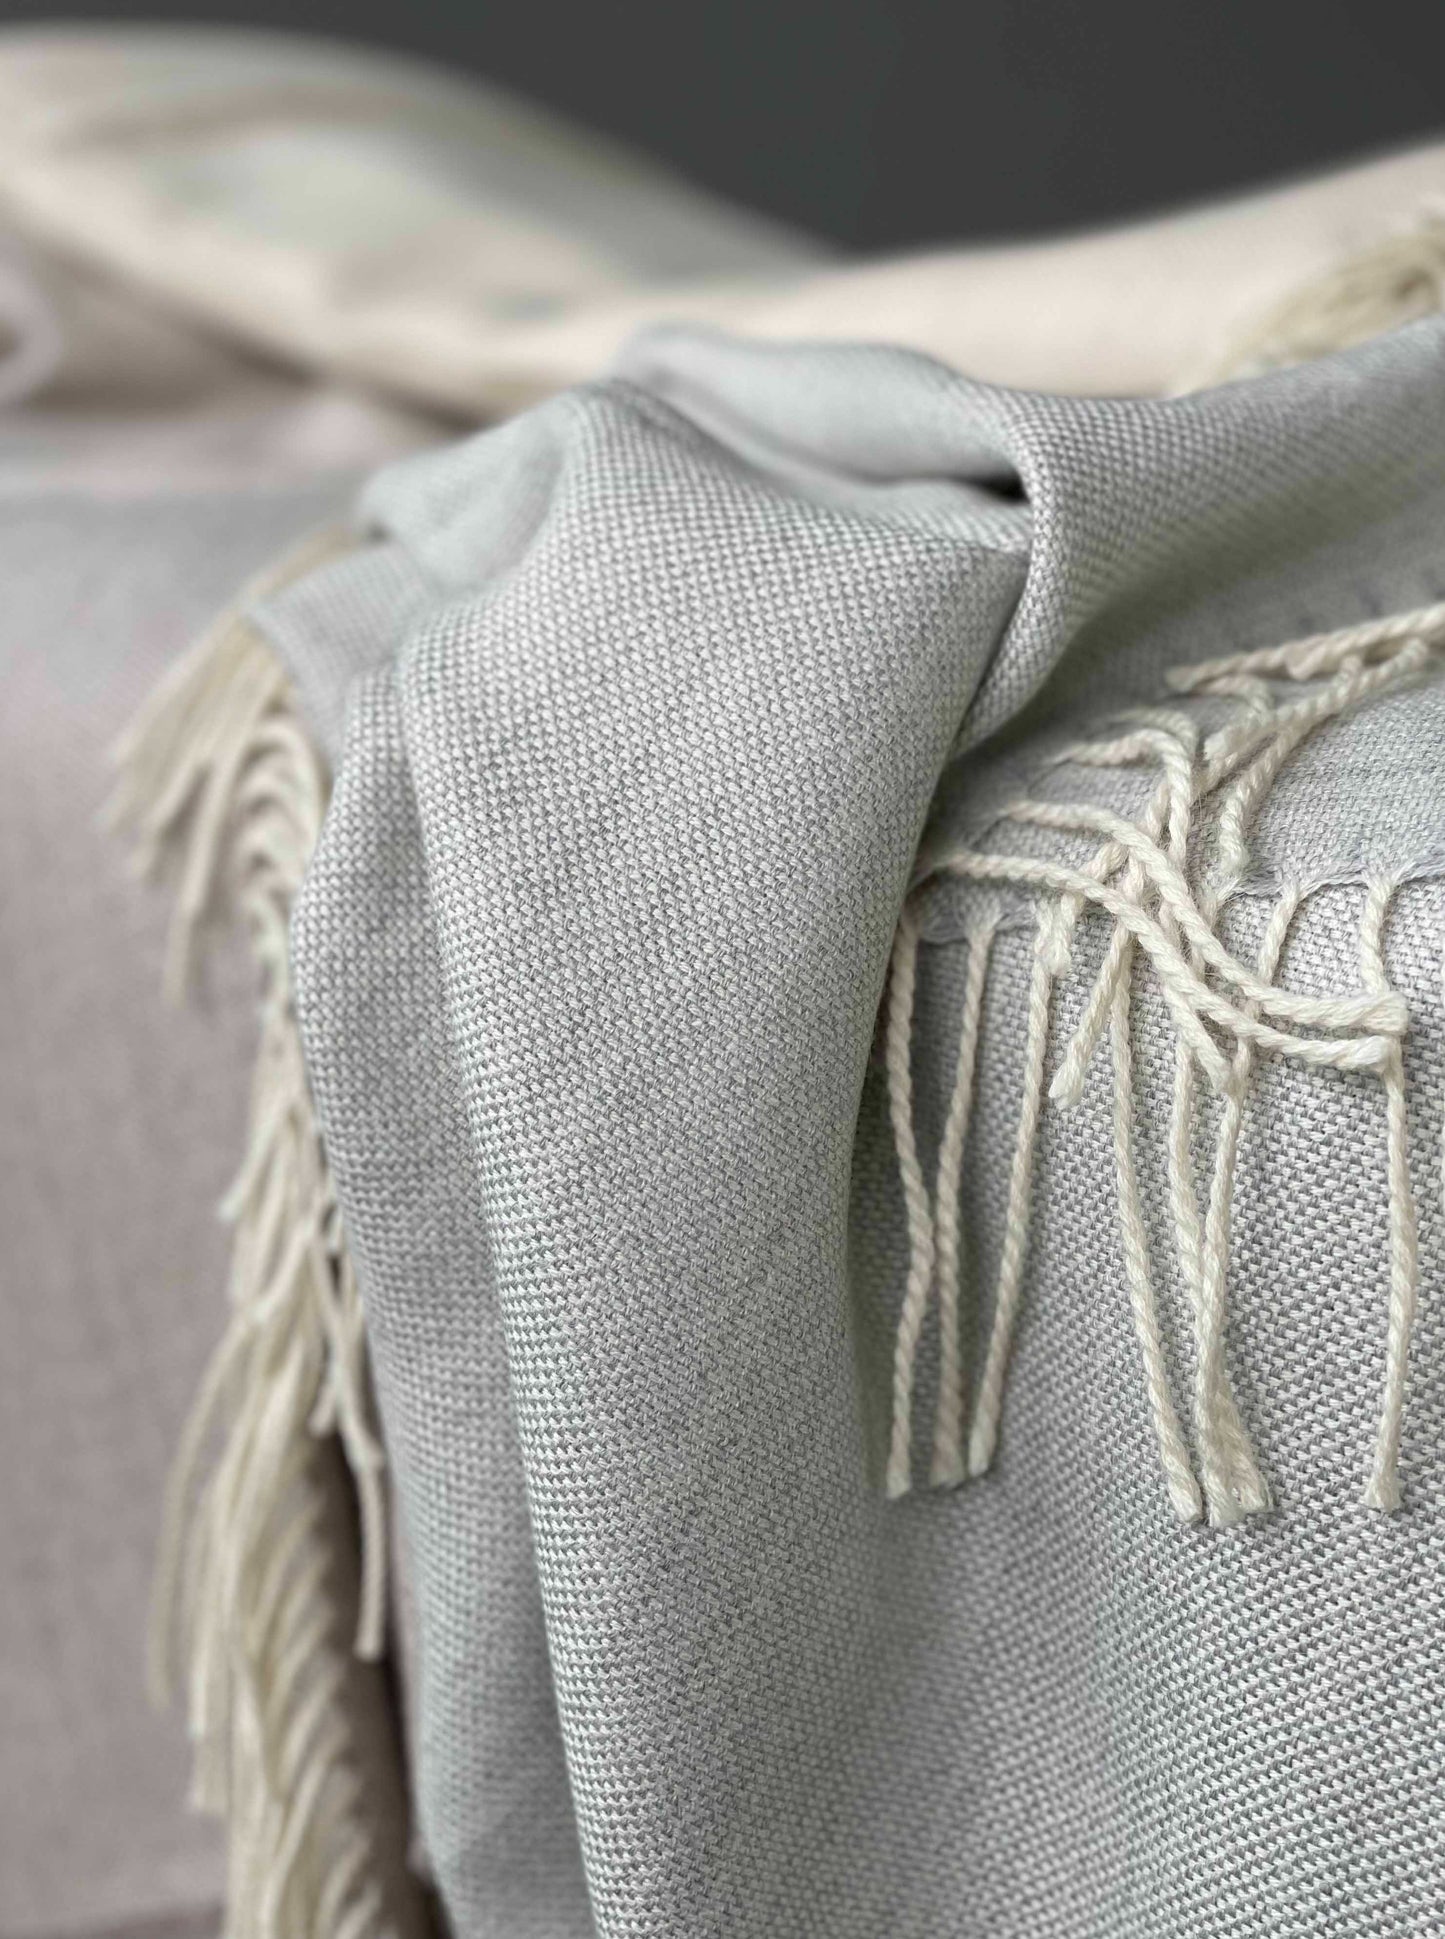 Blanket from alpaca wool in light grey color